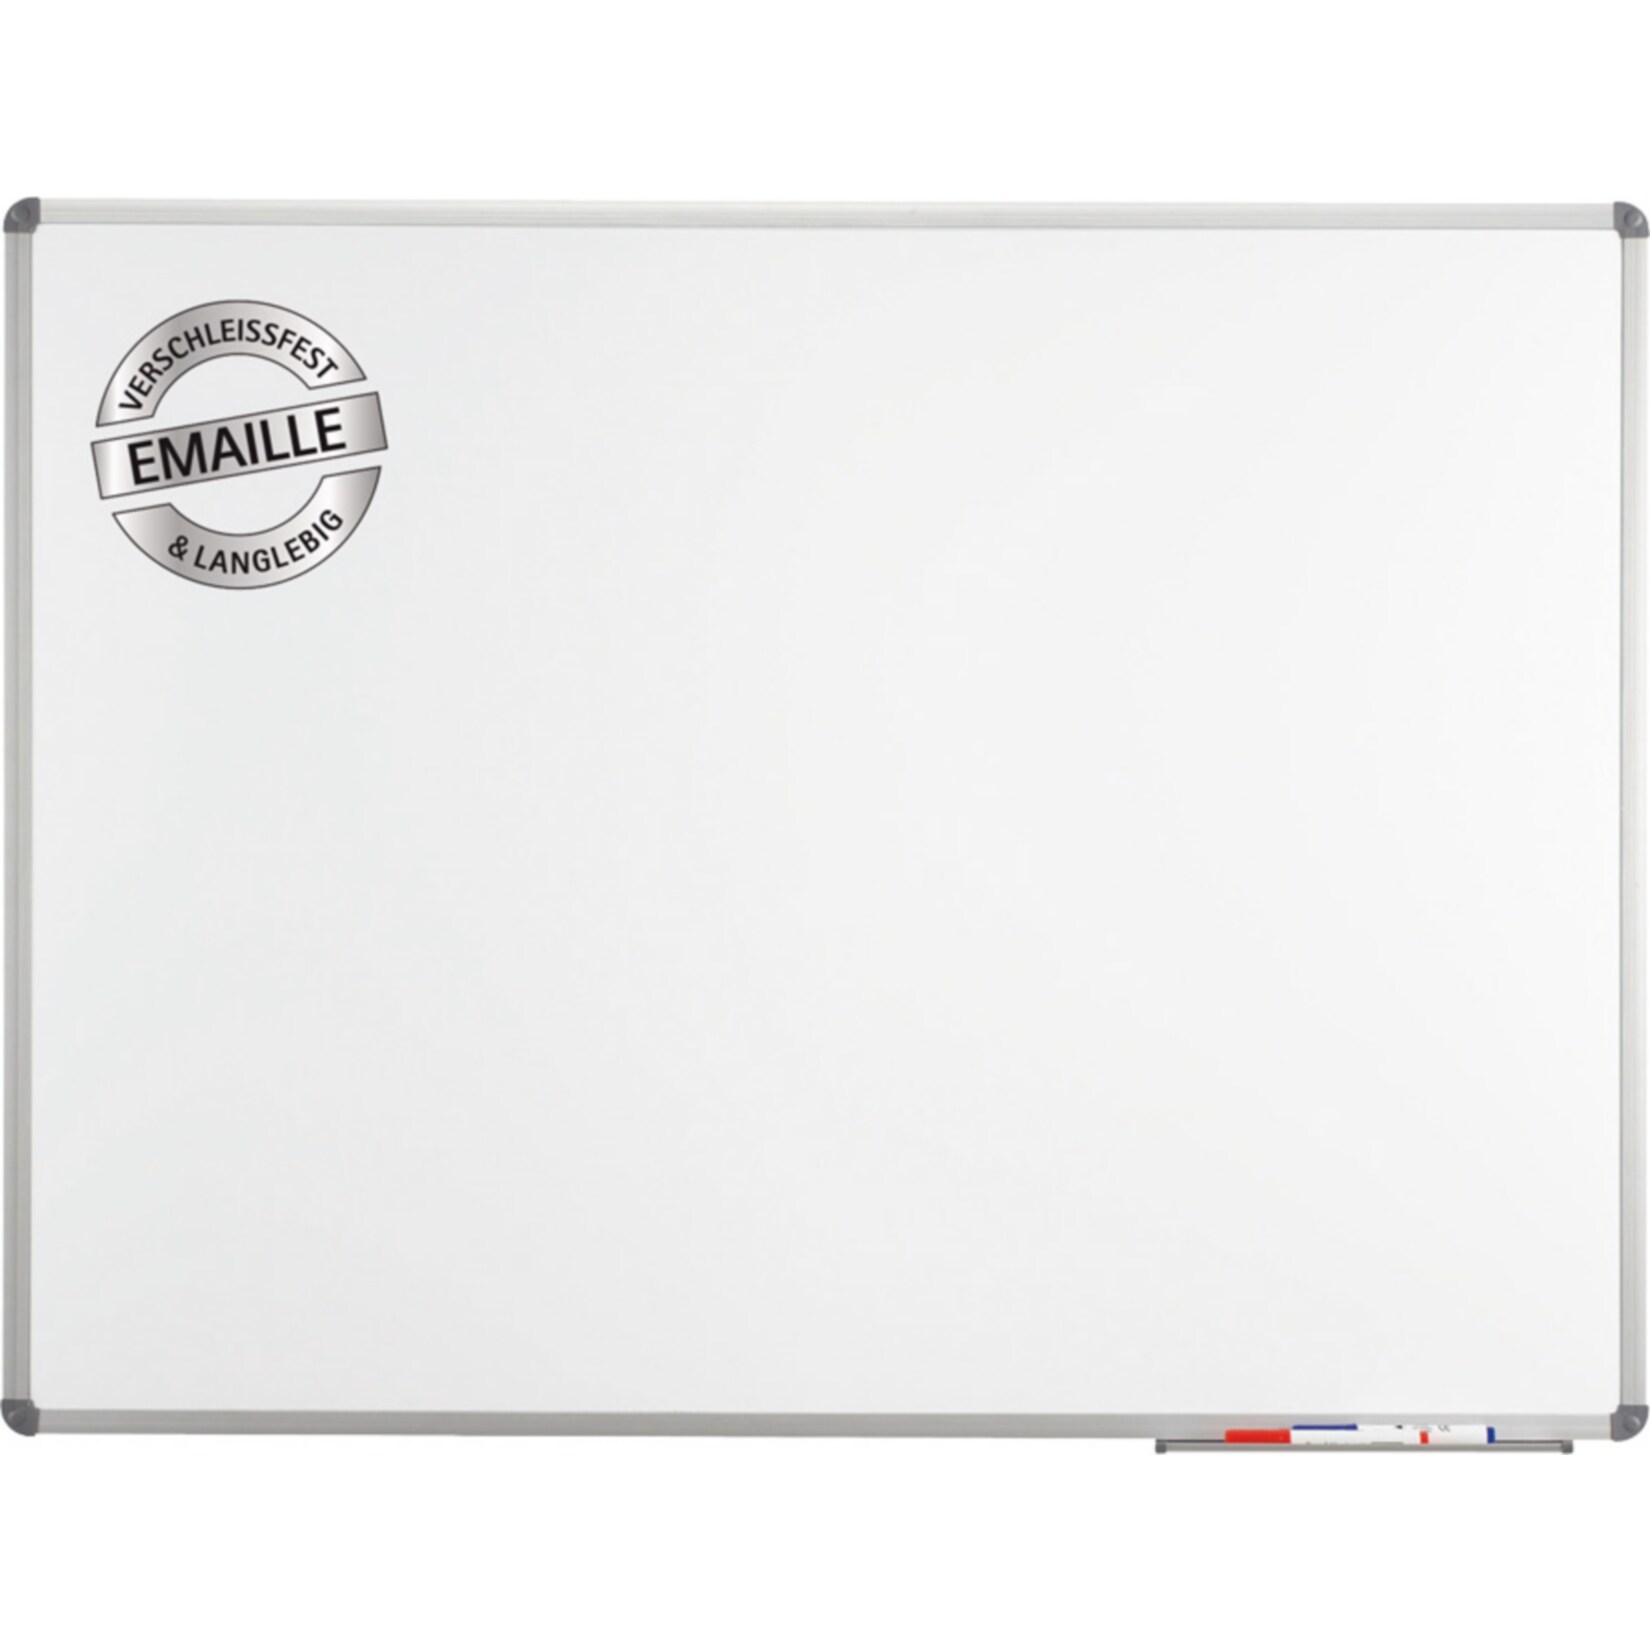 MAUL Whiteboard MAULstandard, Emaille - 100 x 200 cm